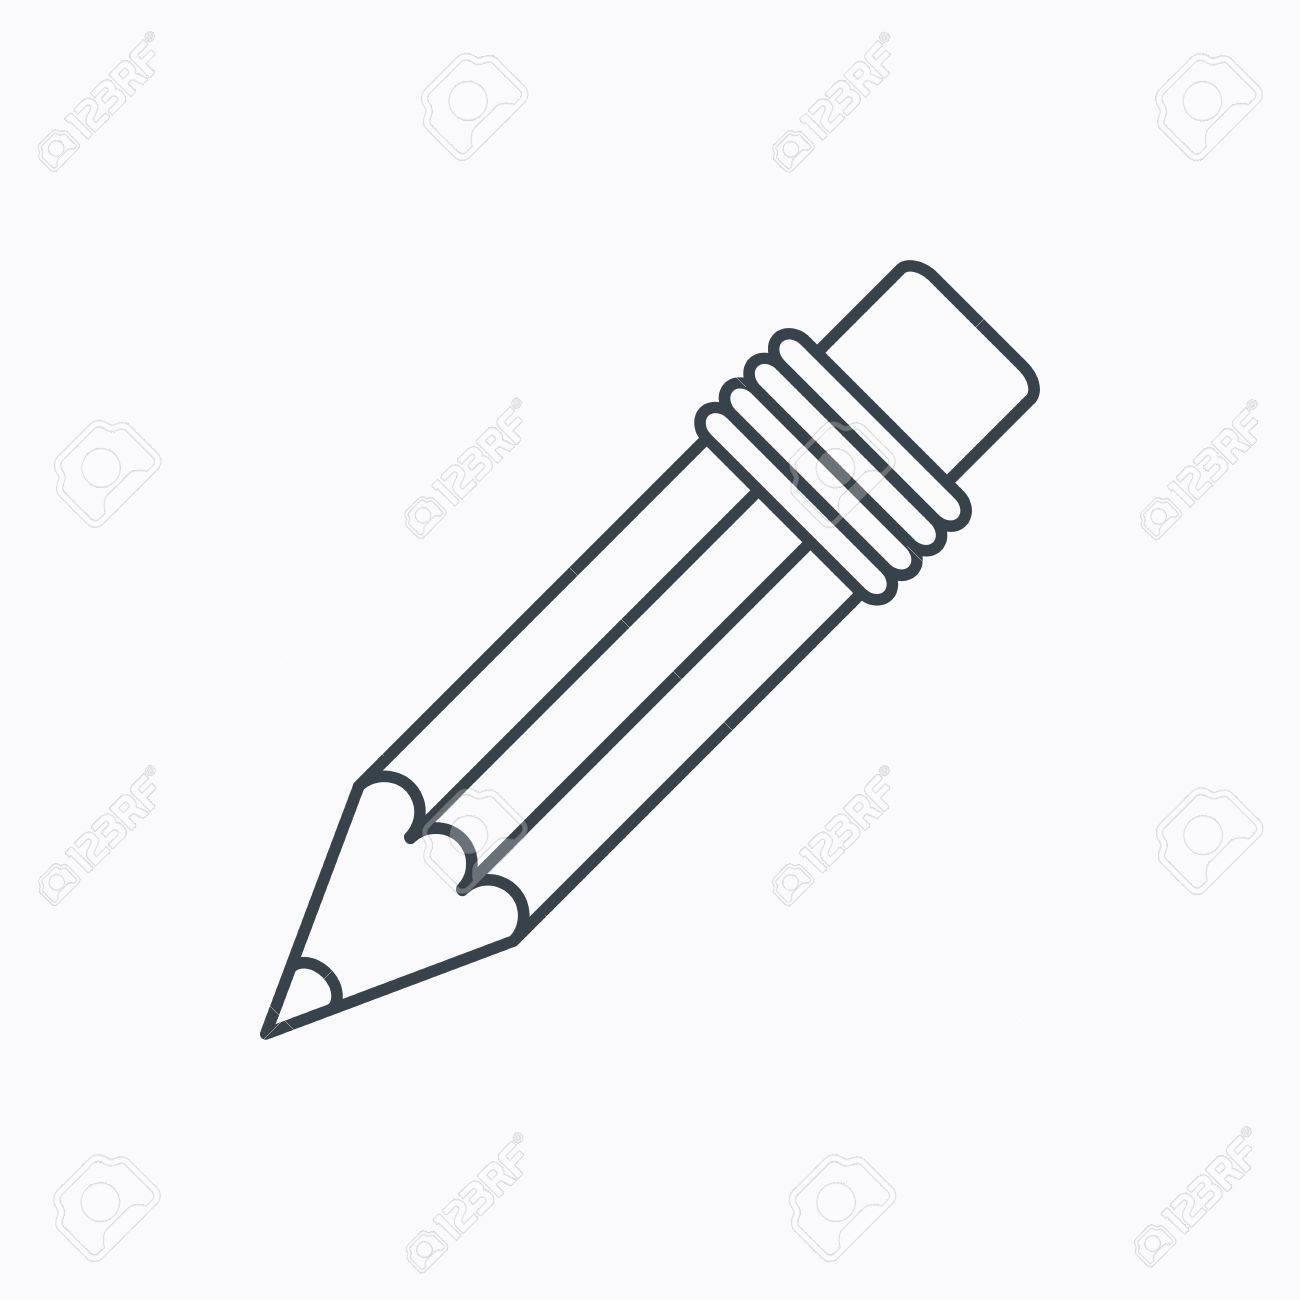 Free white pencil icon - Download white pencil icon